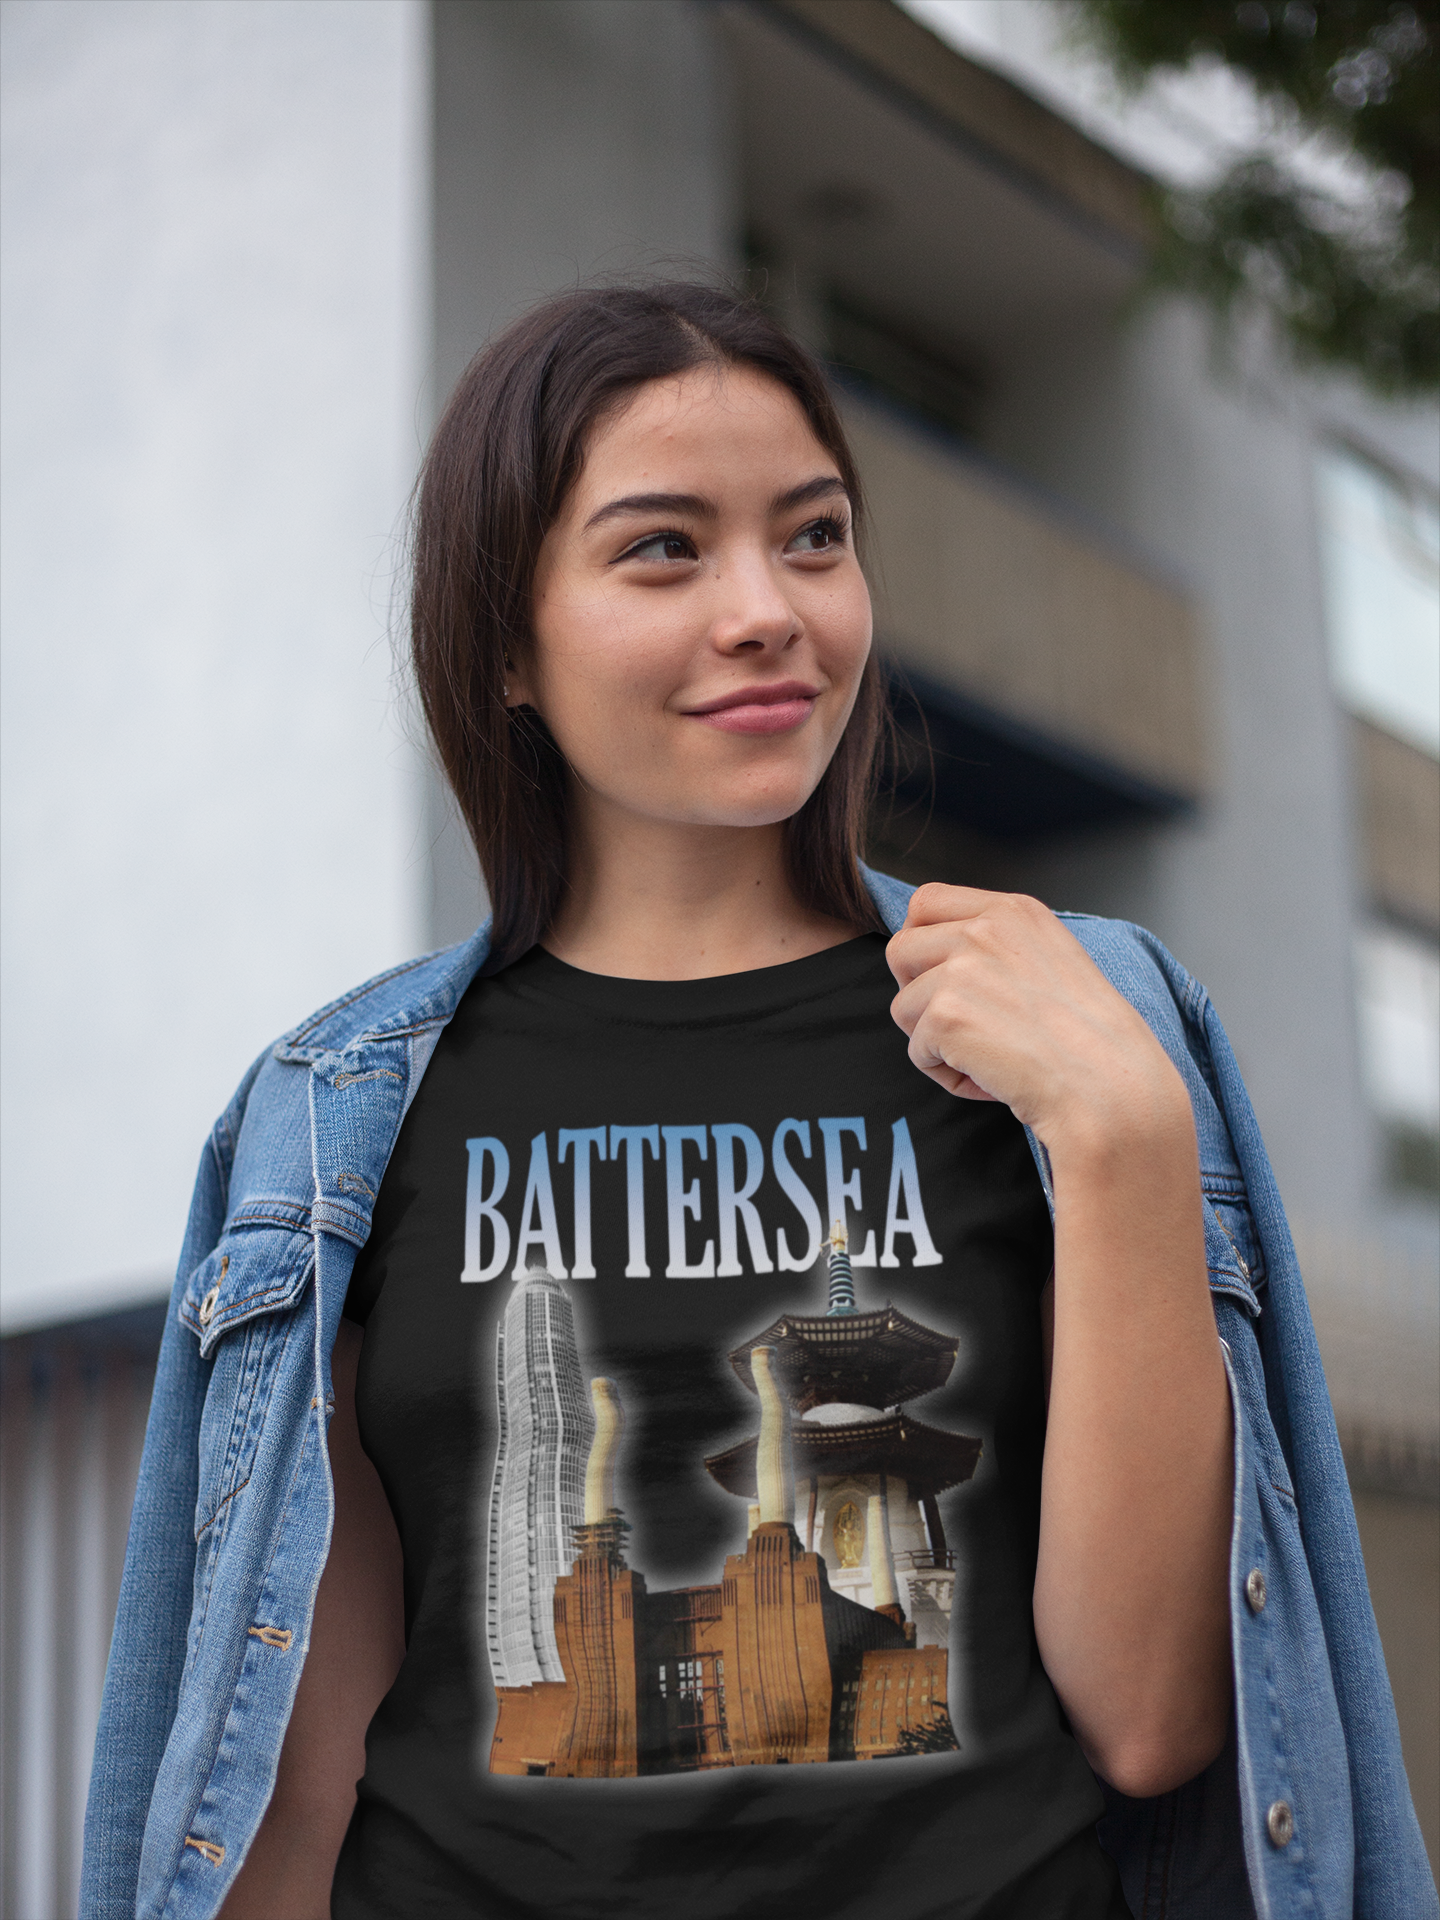 Battersea 90s Style Unisex T-Shirt